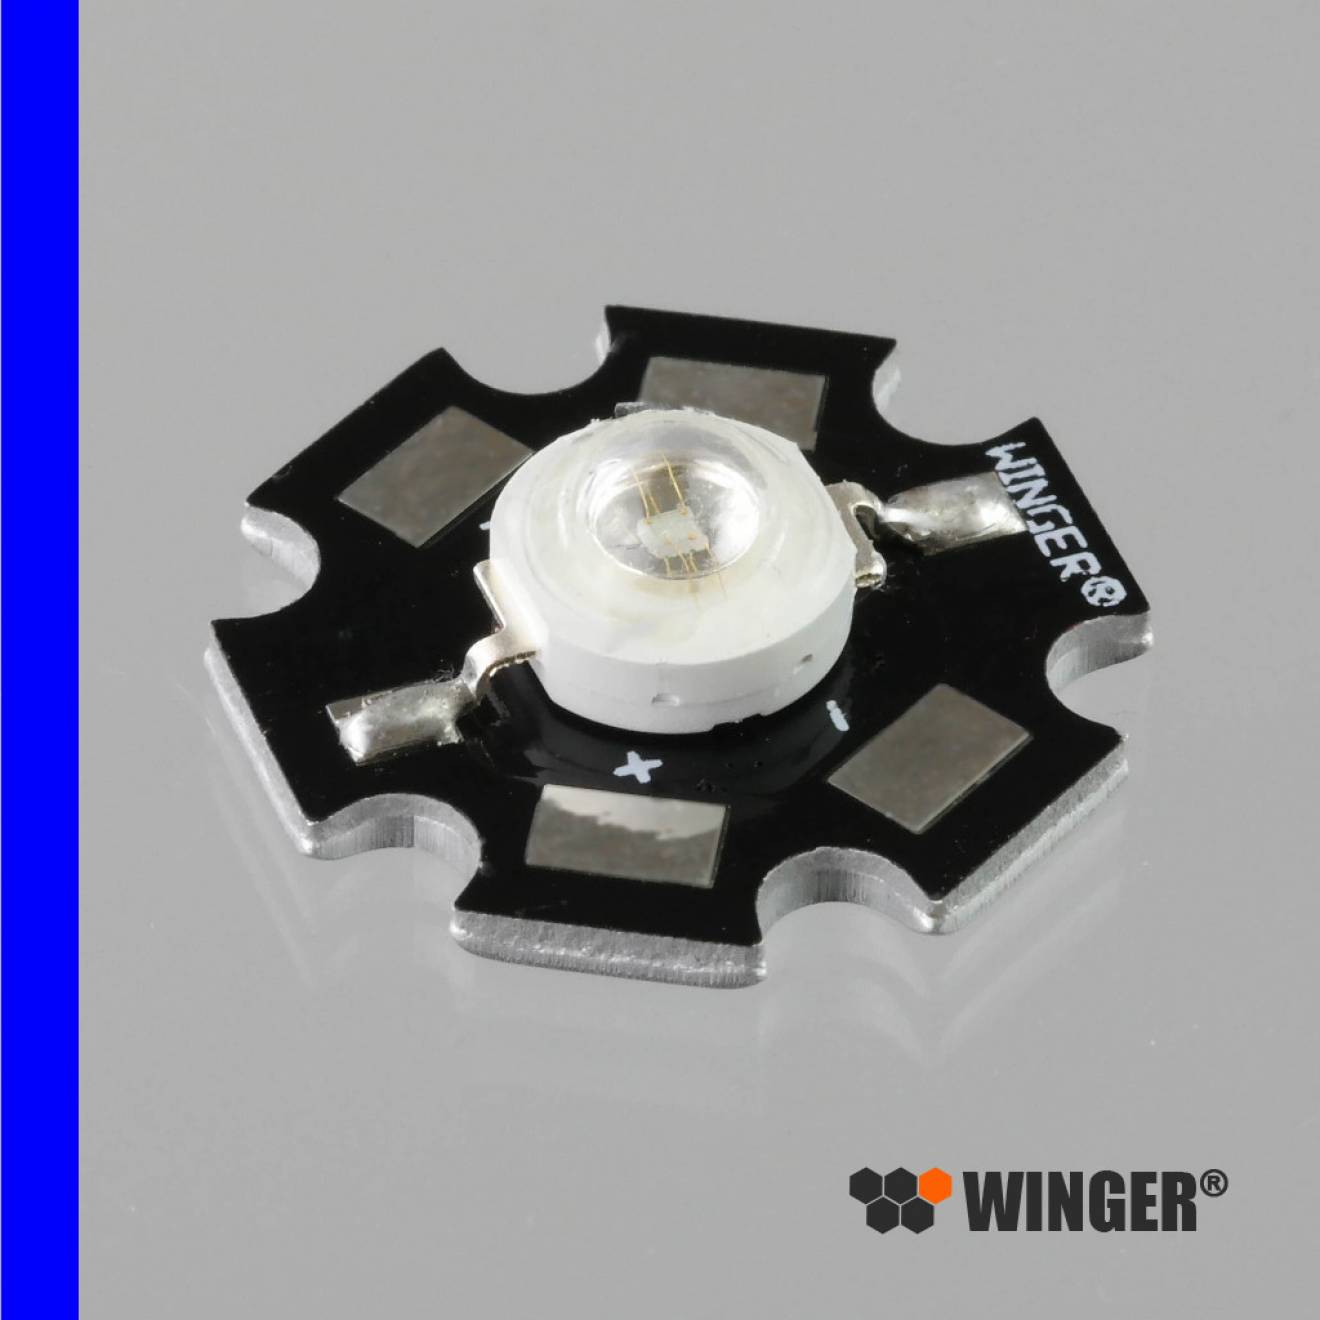 WINGER® WEPBL1-S1 Power LED Star blau (470nm) 1W - 20lm